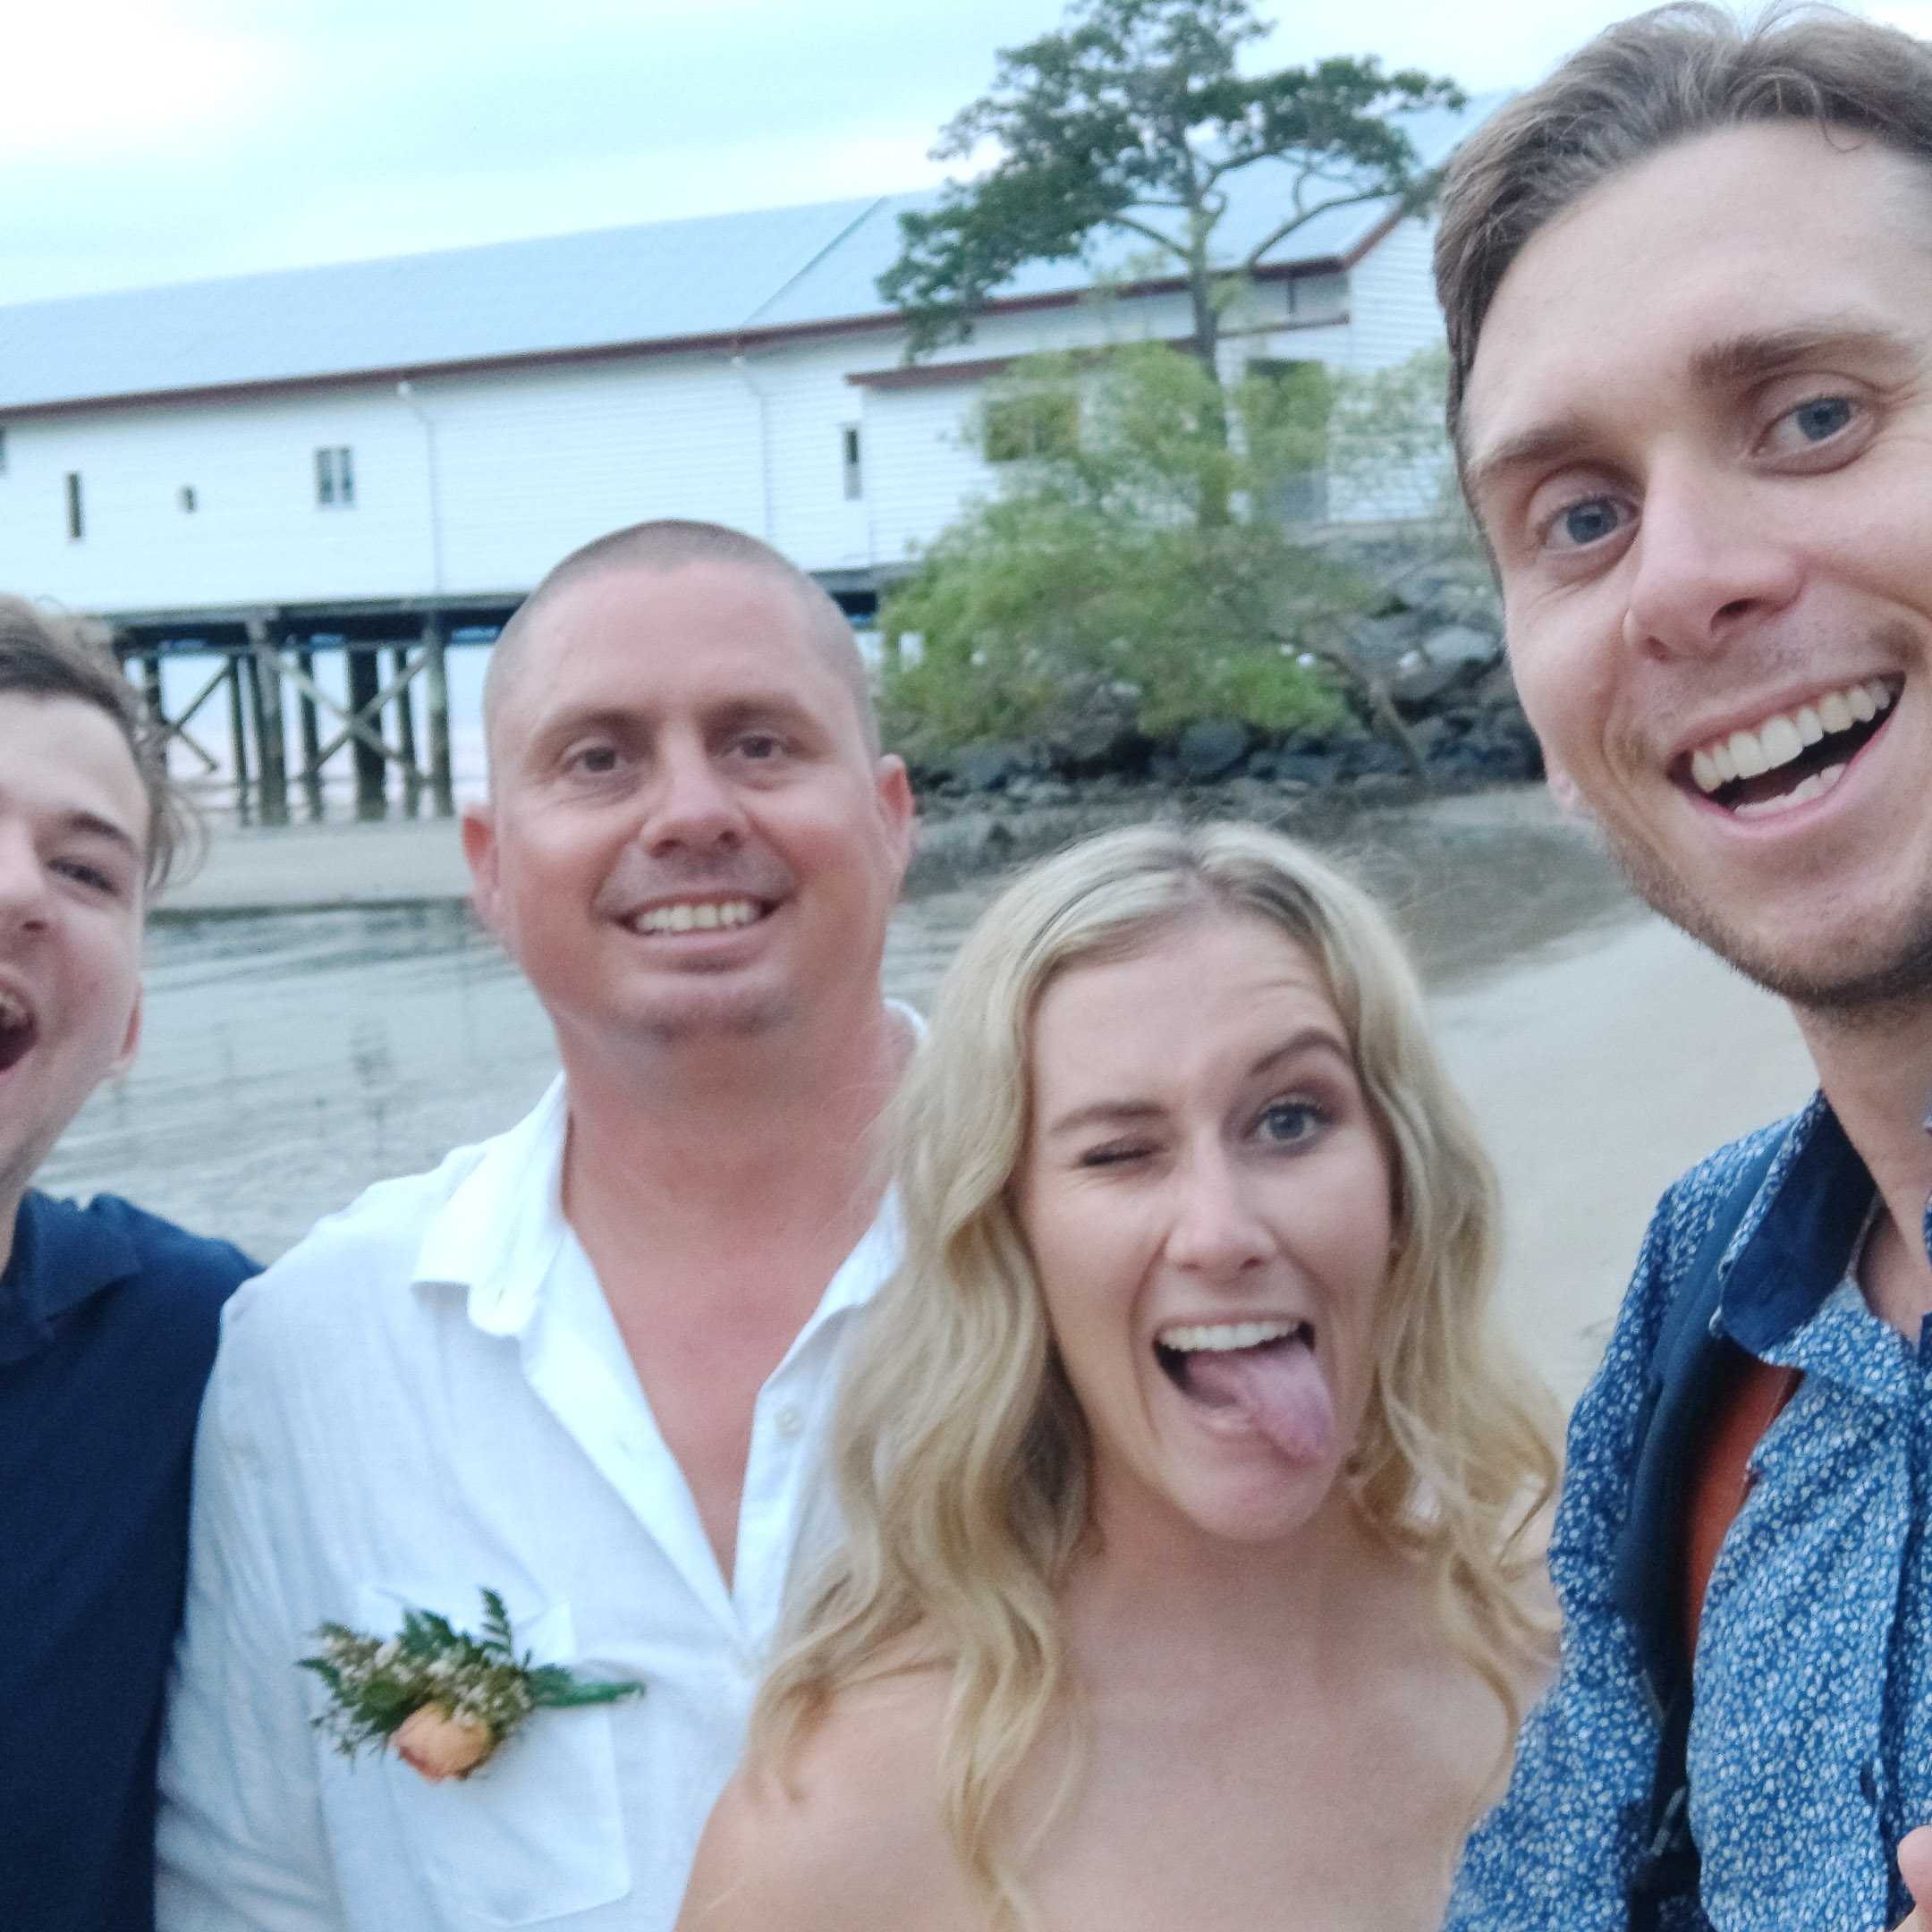 The-raw-photographer-cairns-wedding-photography-bridalparty-selfie-4.jpg